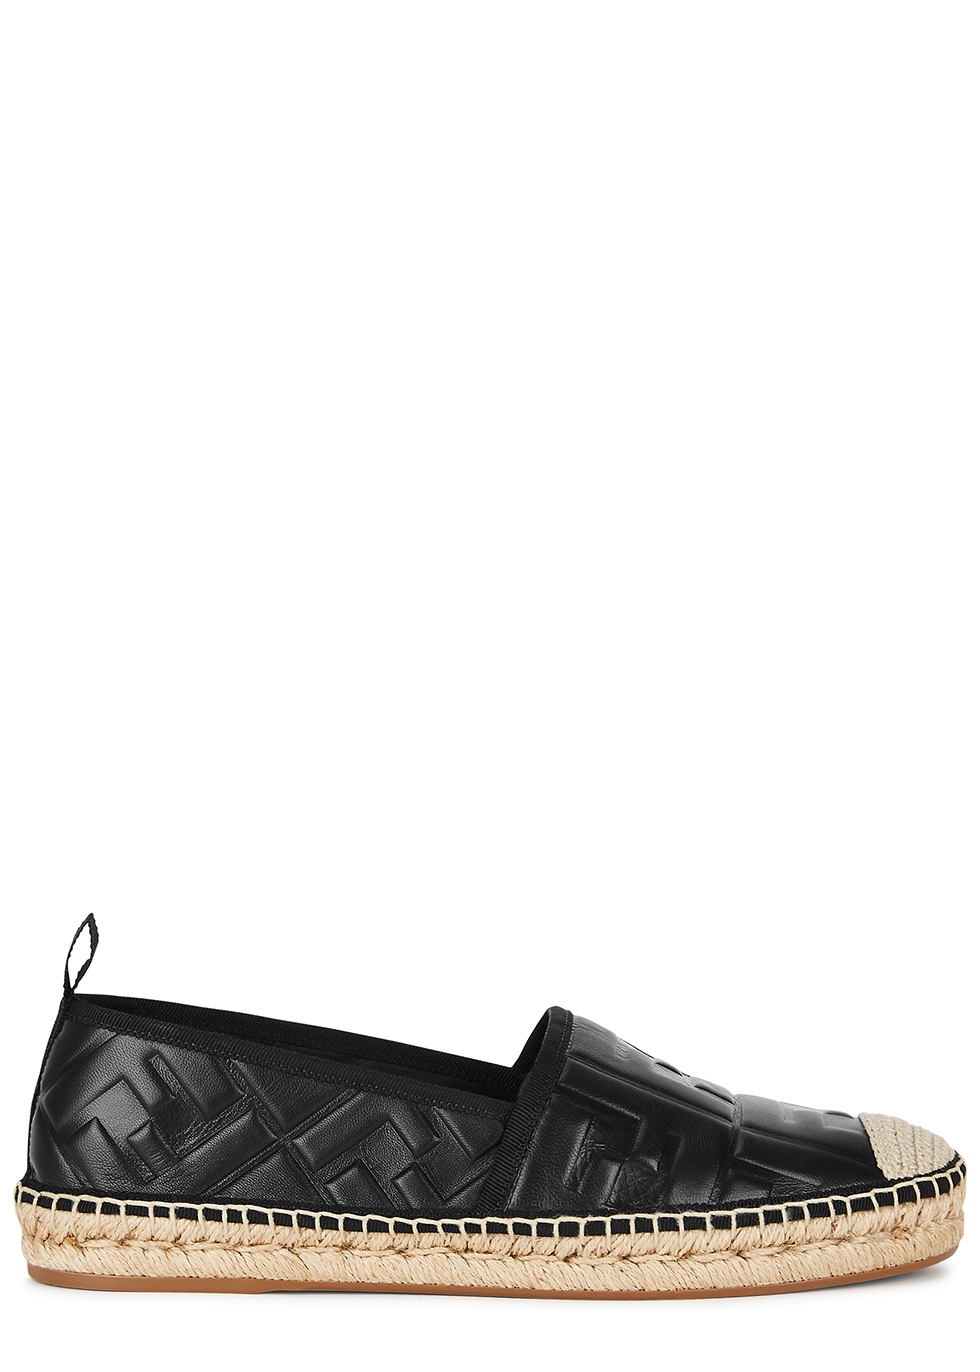 Fendi FF black leather espadrilles 